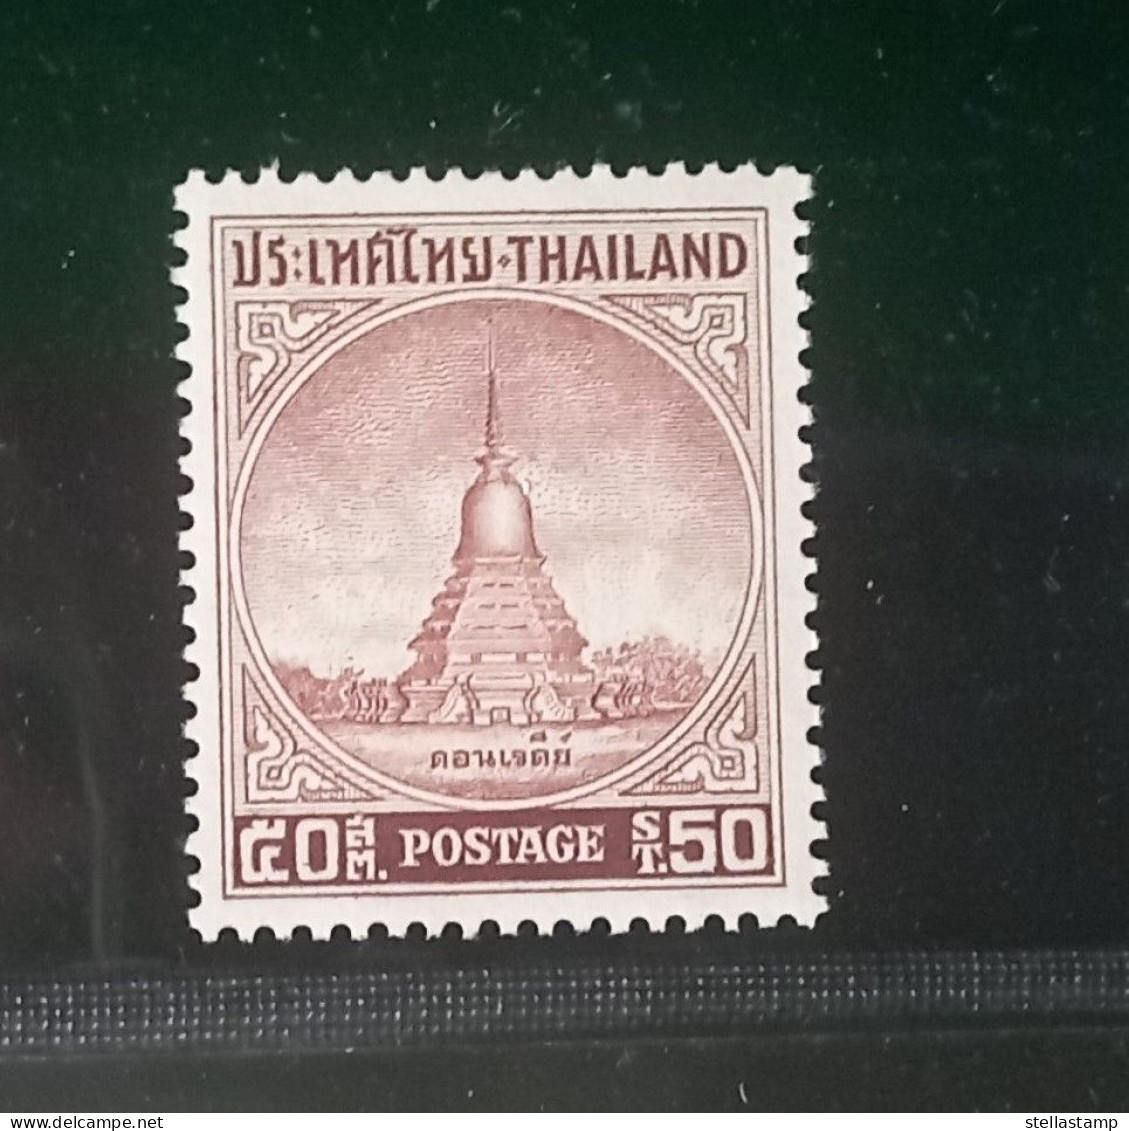 Thailand Stamp 1956 Don Jaydee Monument 50 Satang XF MNH - Thailand